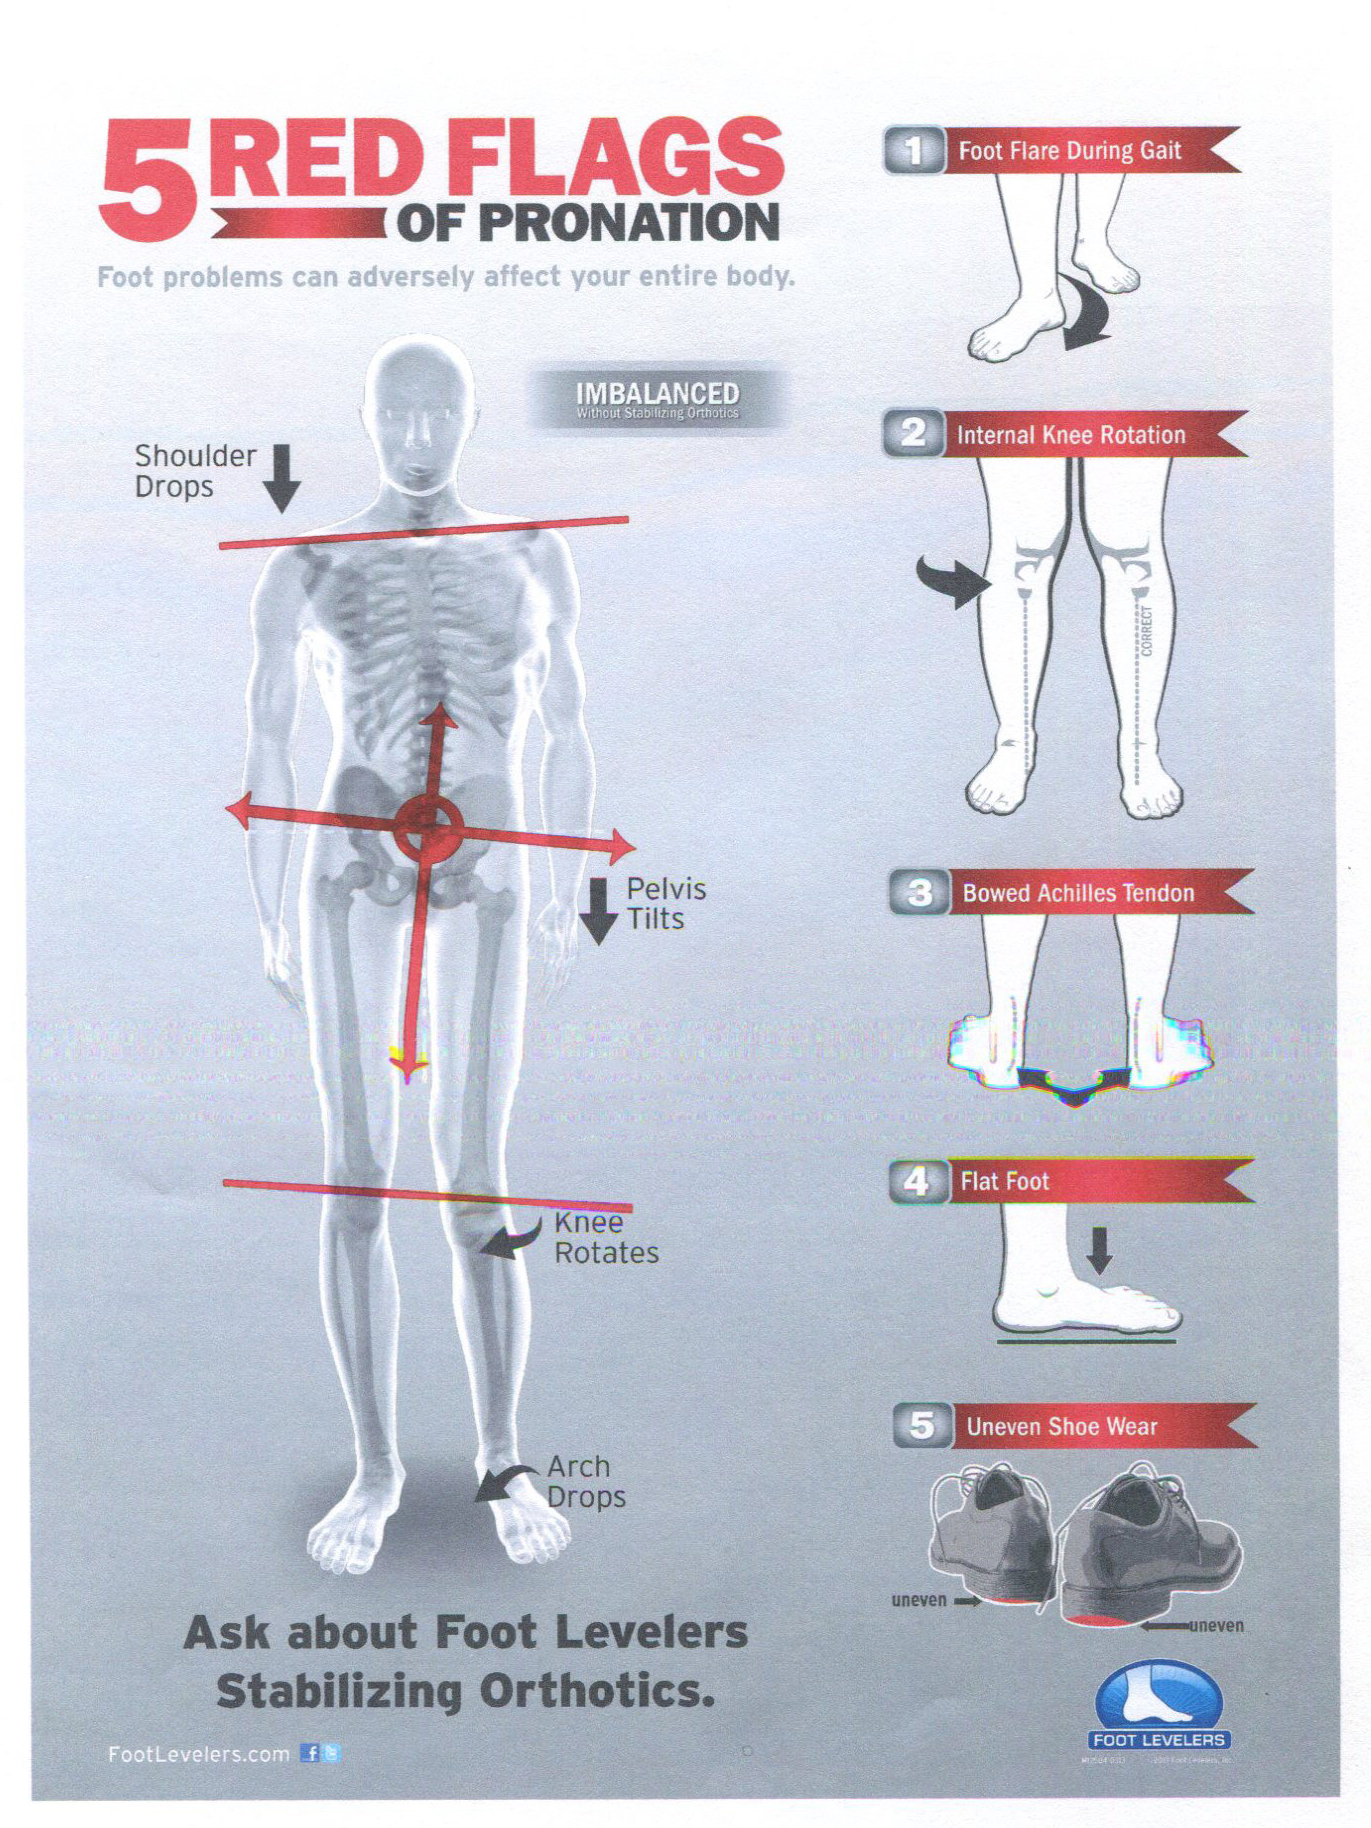 orthotics for knee pain